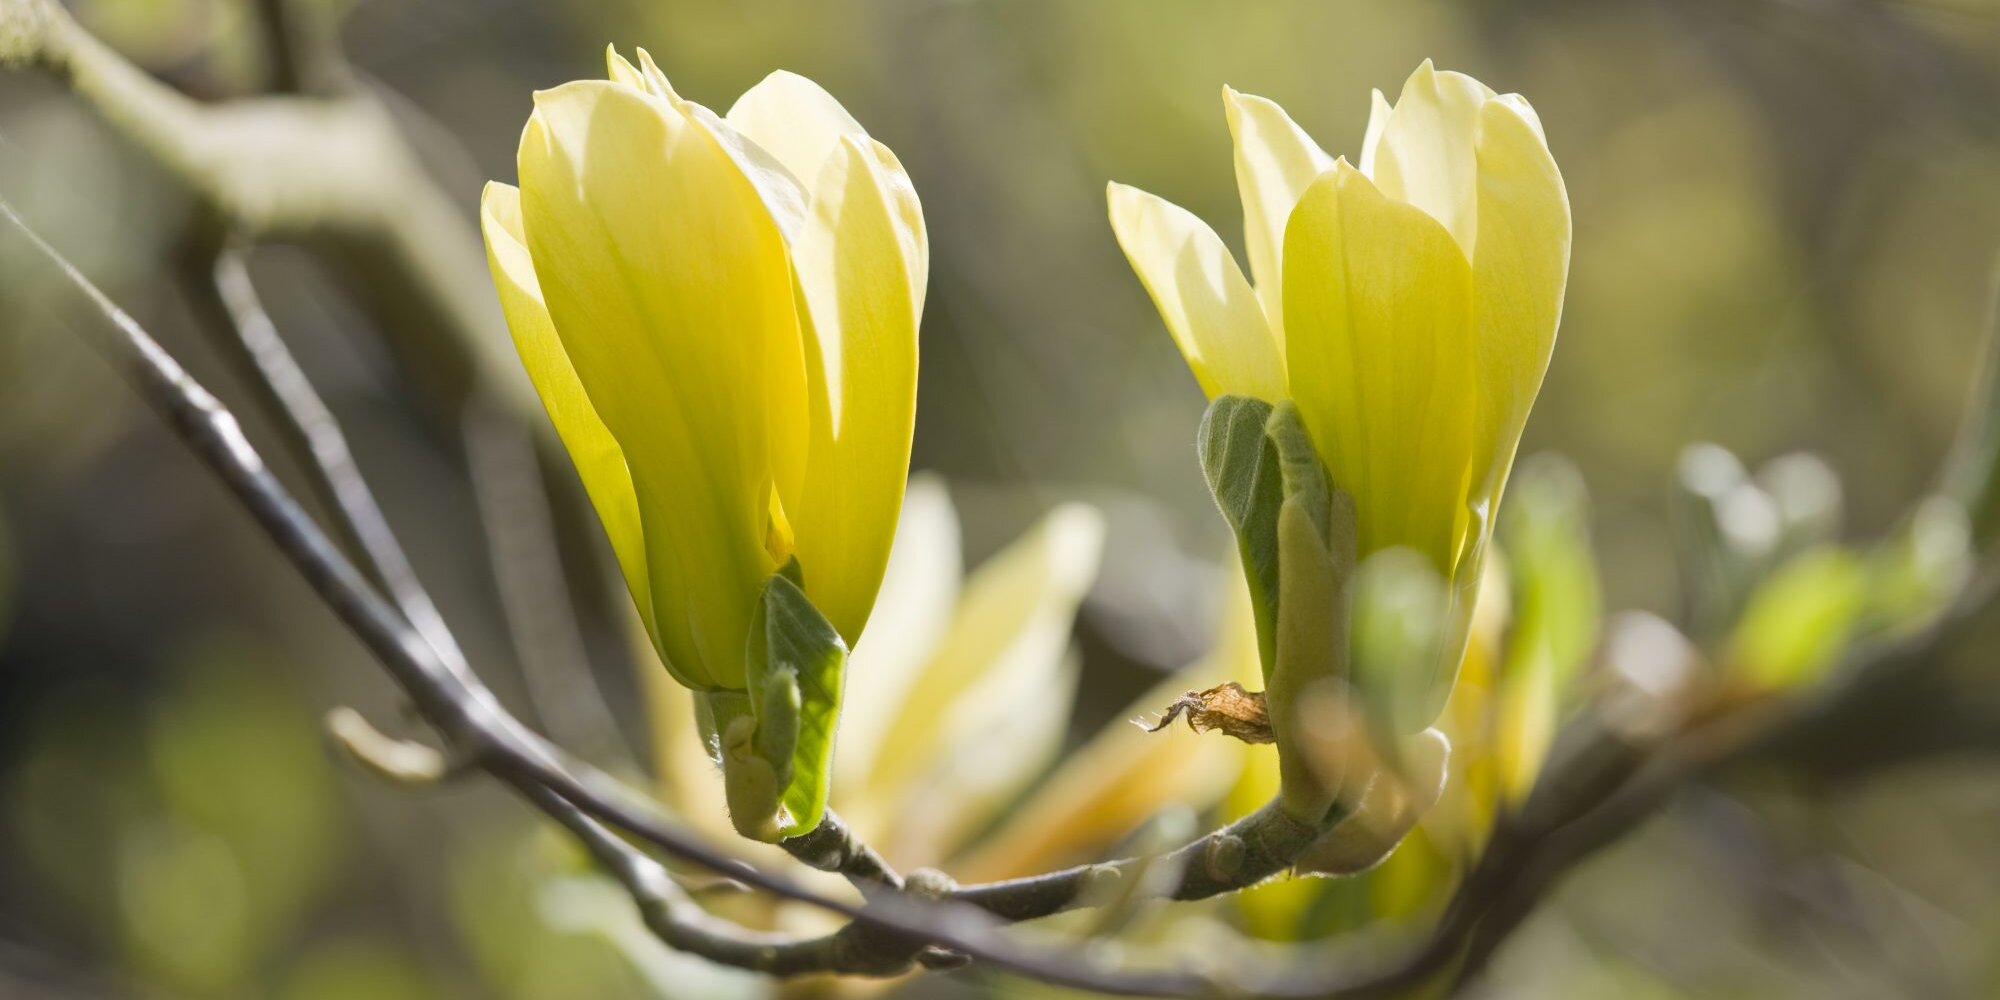 Yellow magnolia